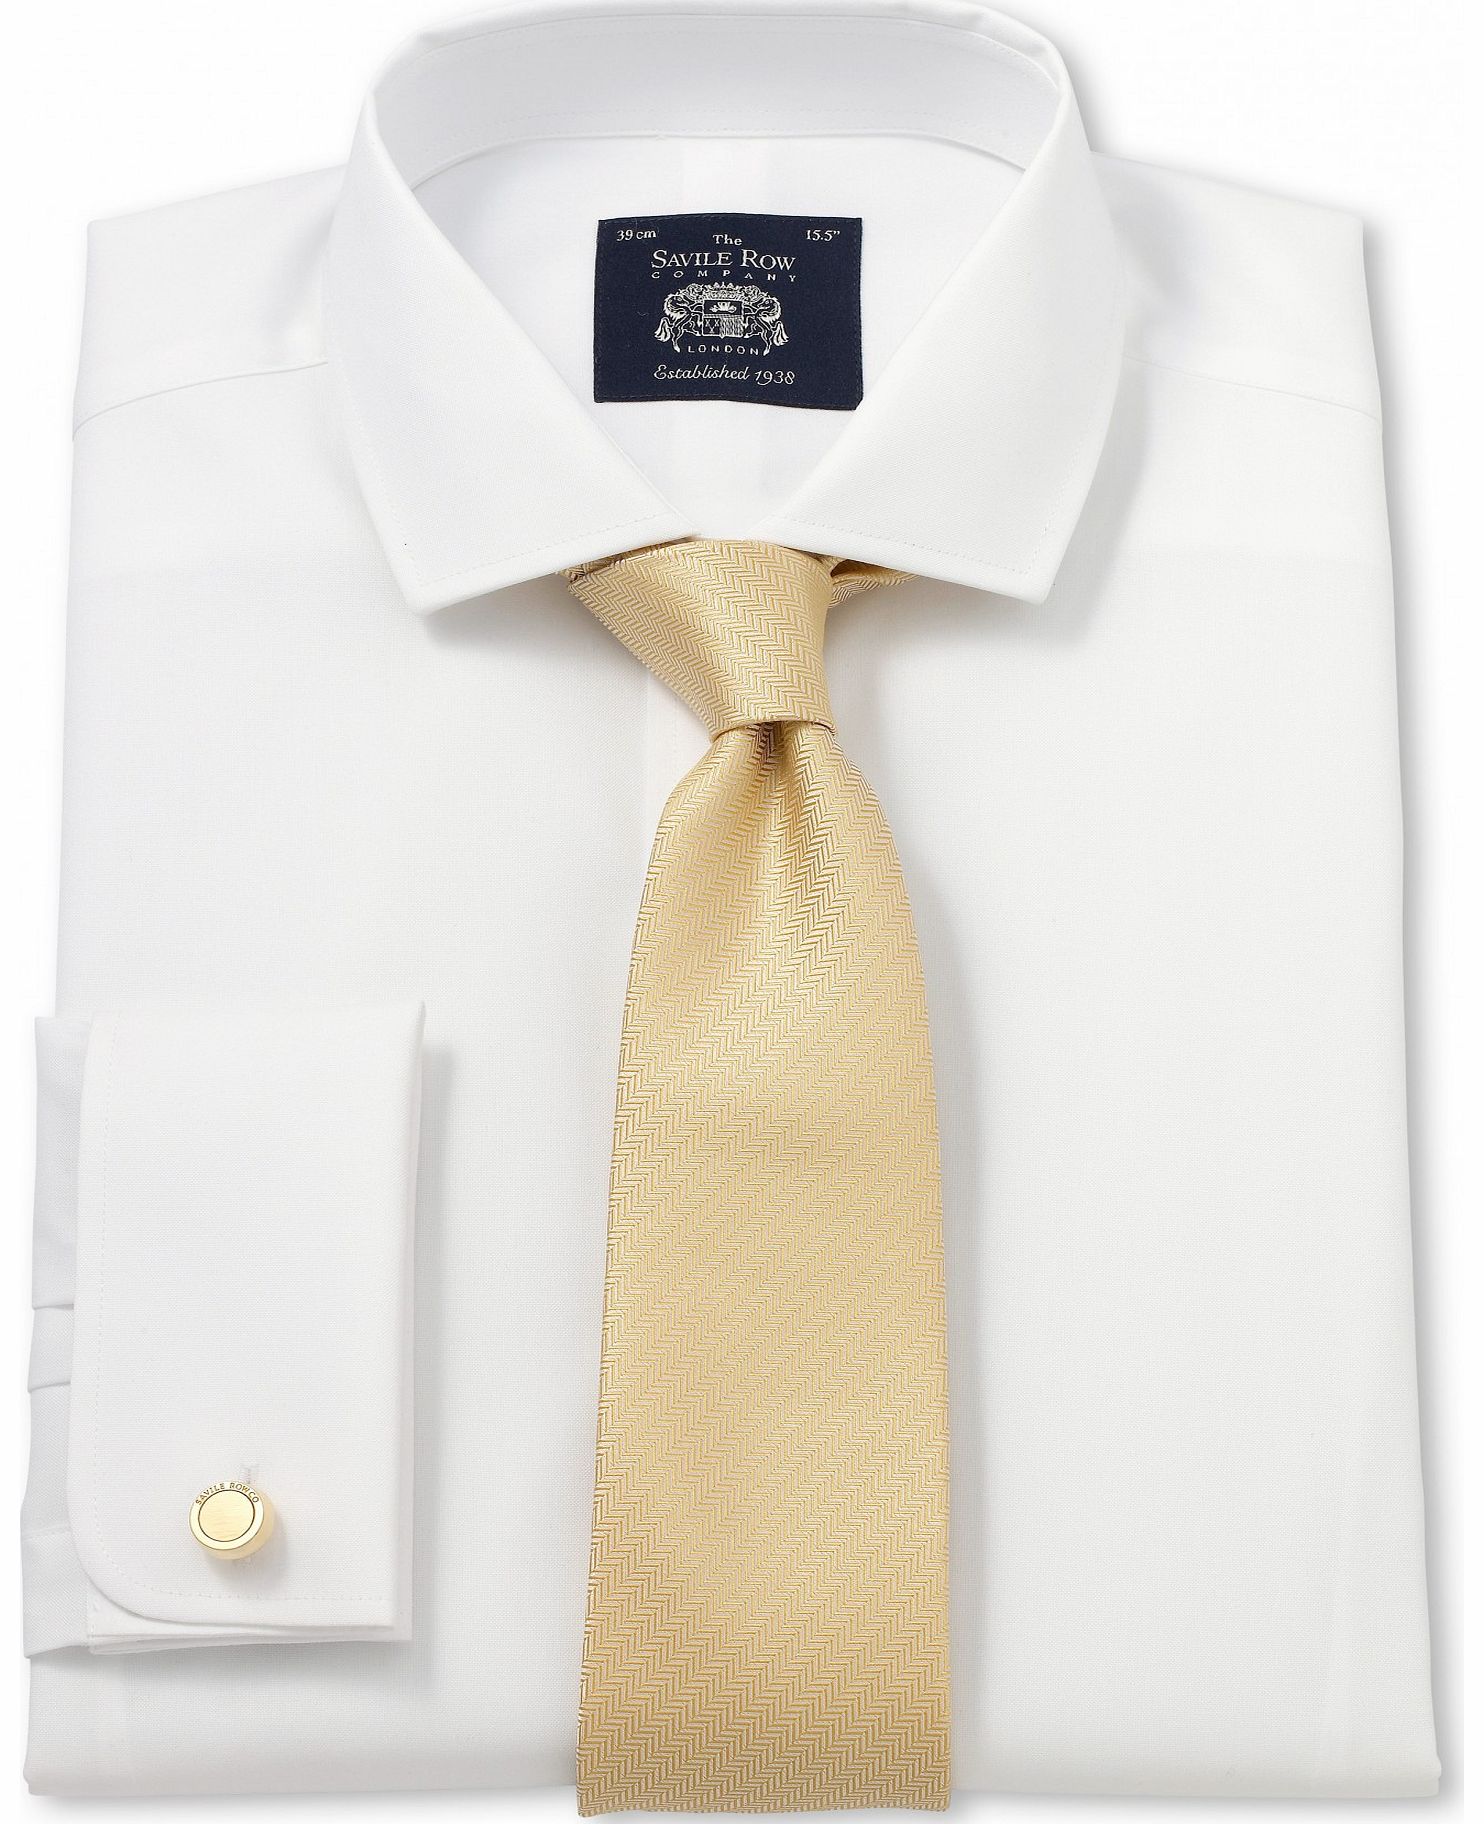 Savile Row Company White Poplin Non Iron Extra Slim Fit Shirt 16``